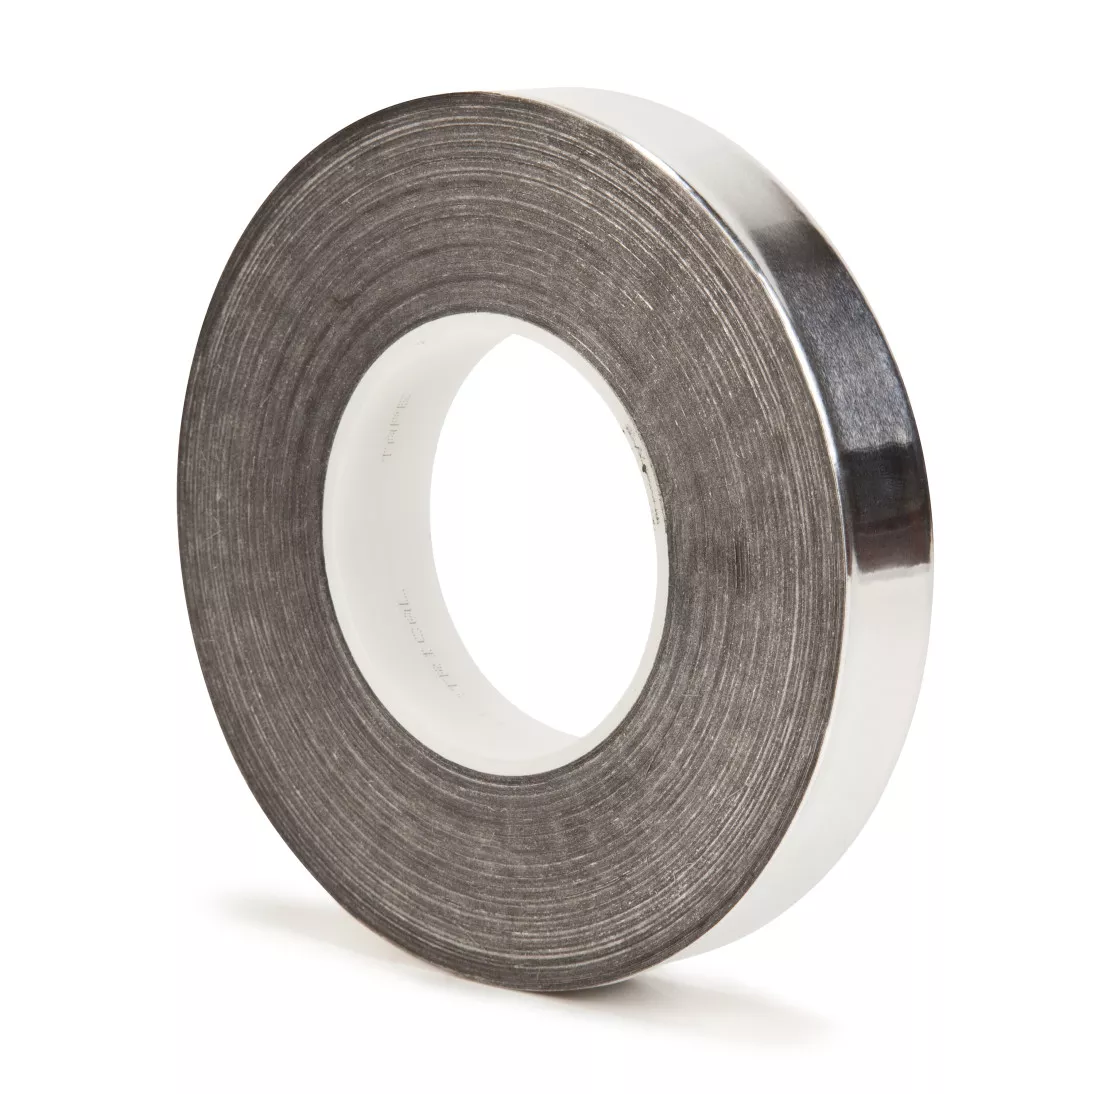 3M™ Aluminum Foil Tape 1115B, 4.27 in x 60 yd, 4.5 mil, 3 in core,
Silver, 3 Rolls/Case